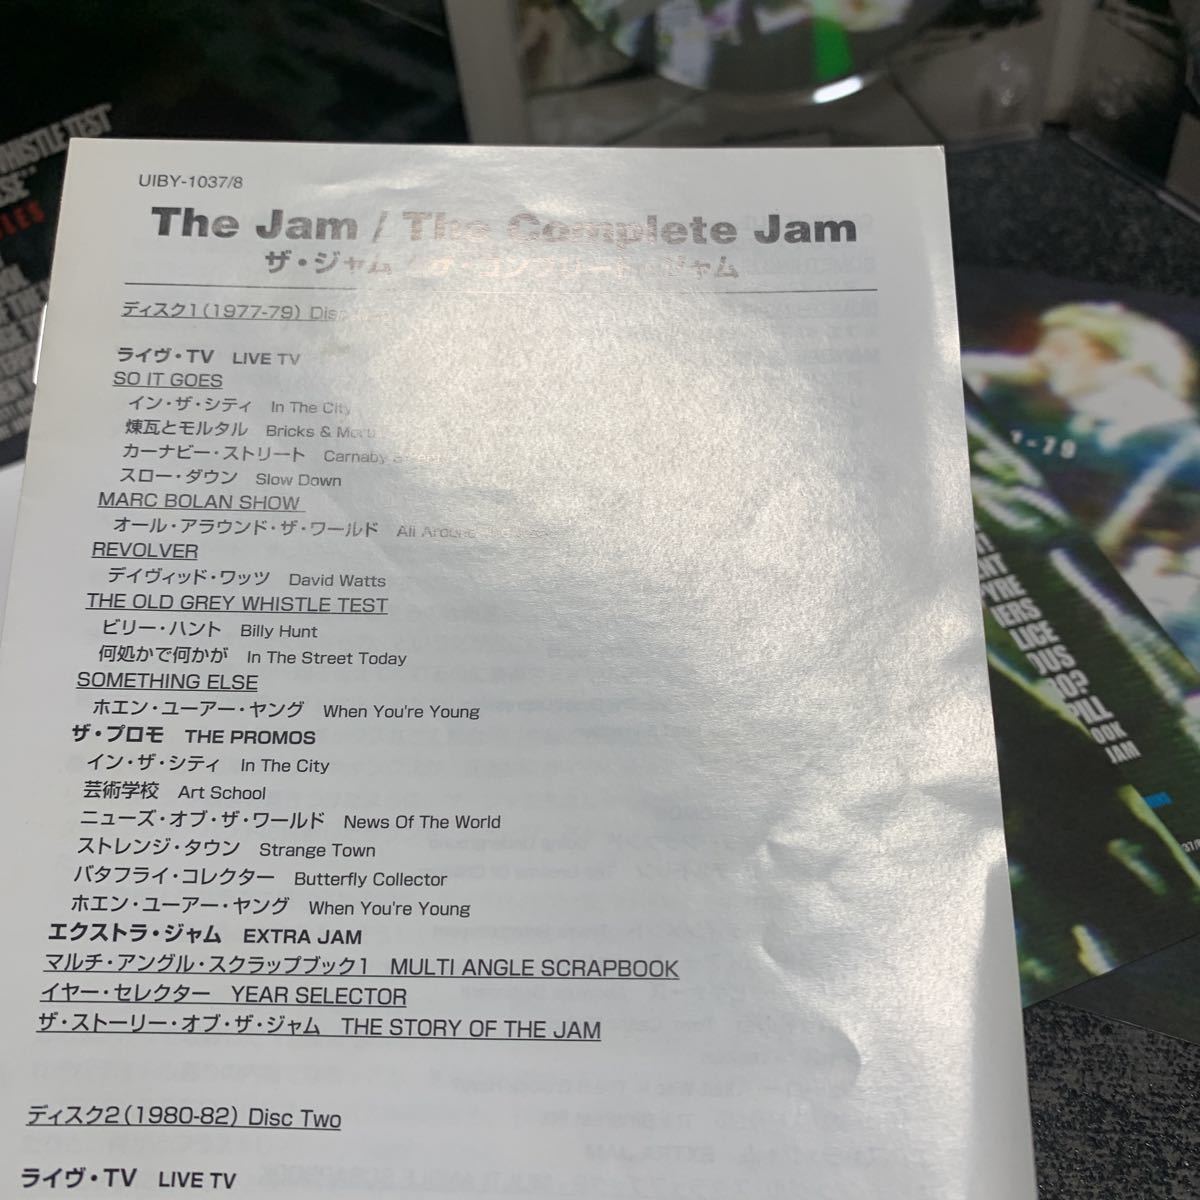 2DVD The * jam /COMPLETE JAM 1977-1982 THE COMPLETE JAM ON FILM paul (pole) *wela-